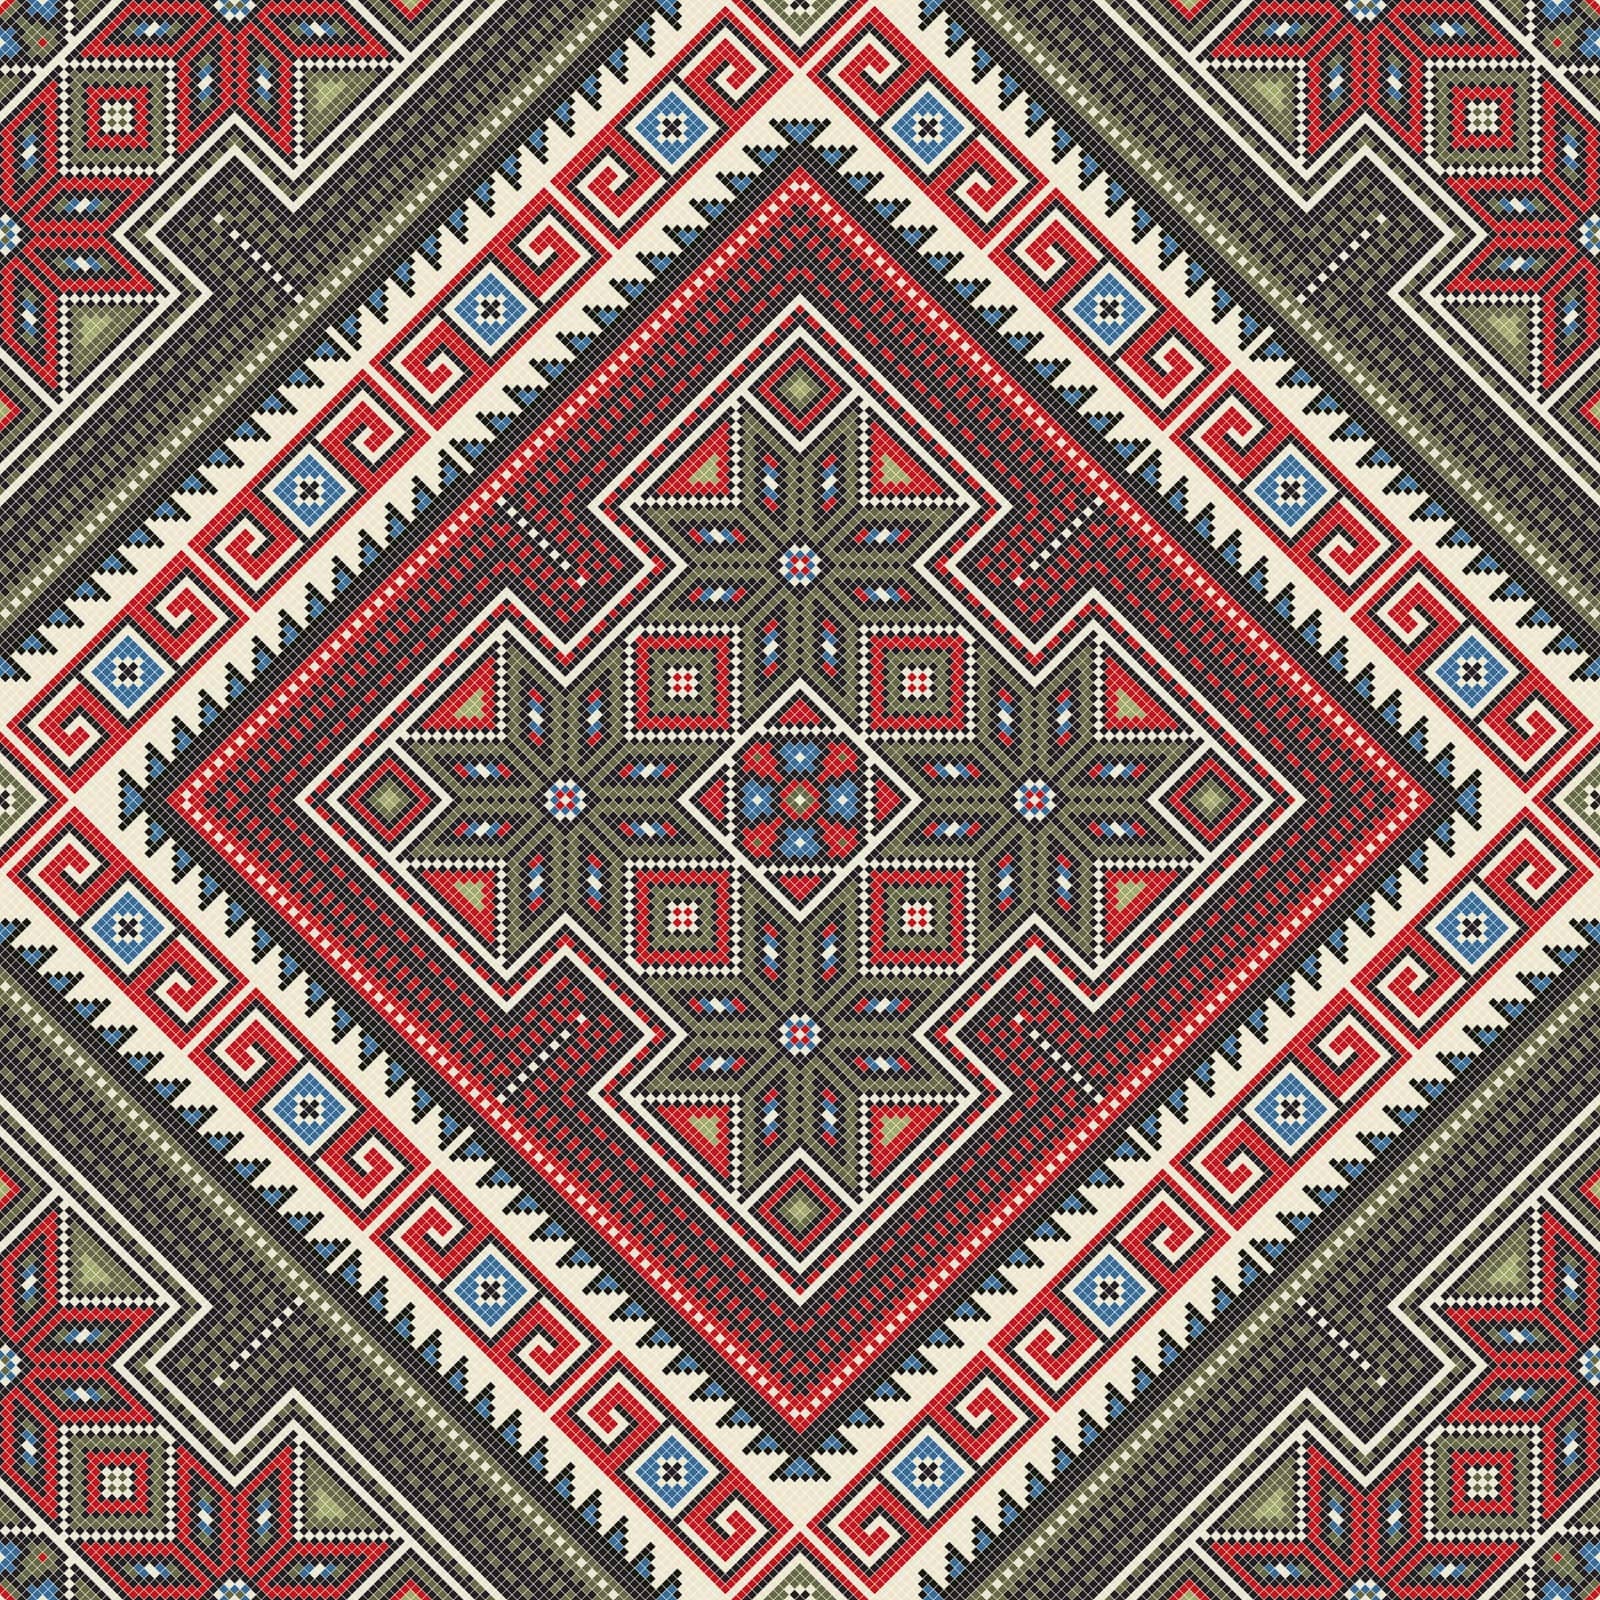 Georgian embroidery pattern 46 by Lirch